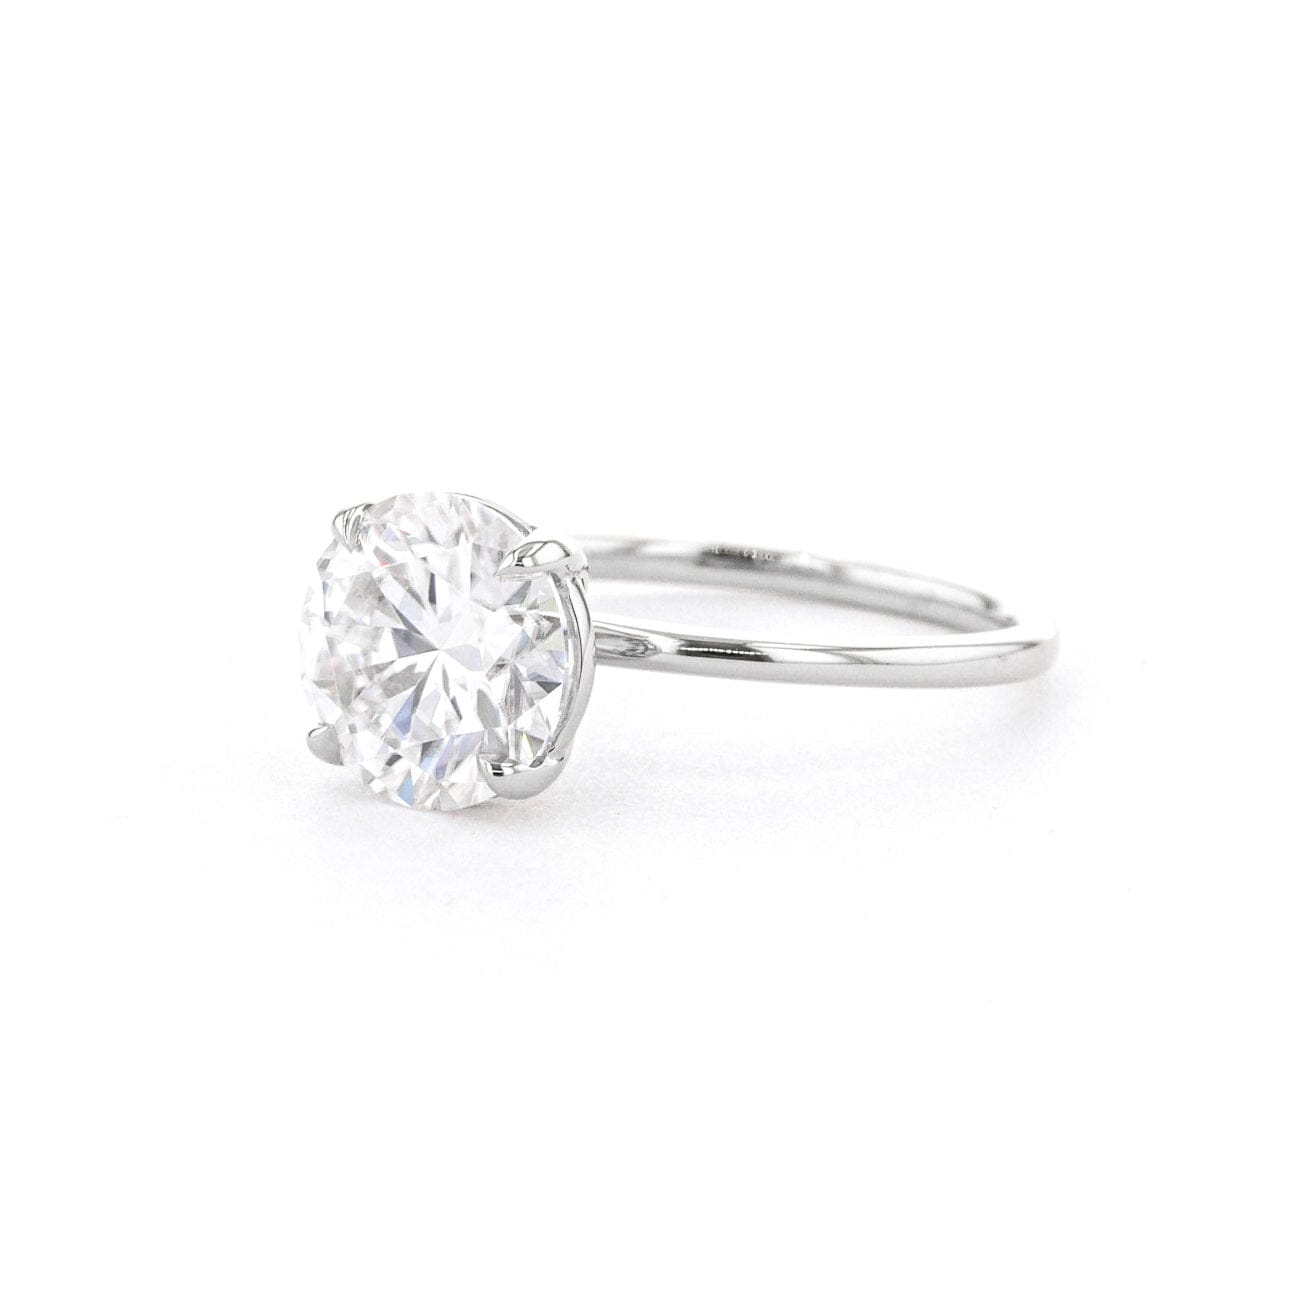 1.6mm Leah Round High Polish Engagement Rings Princess Bride Diamonds 